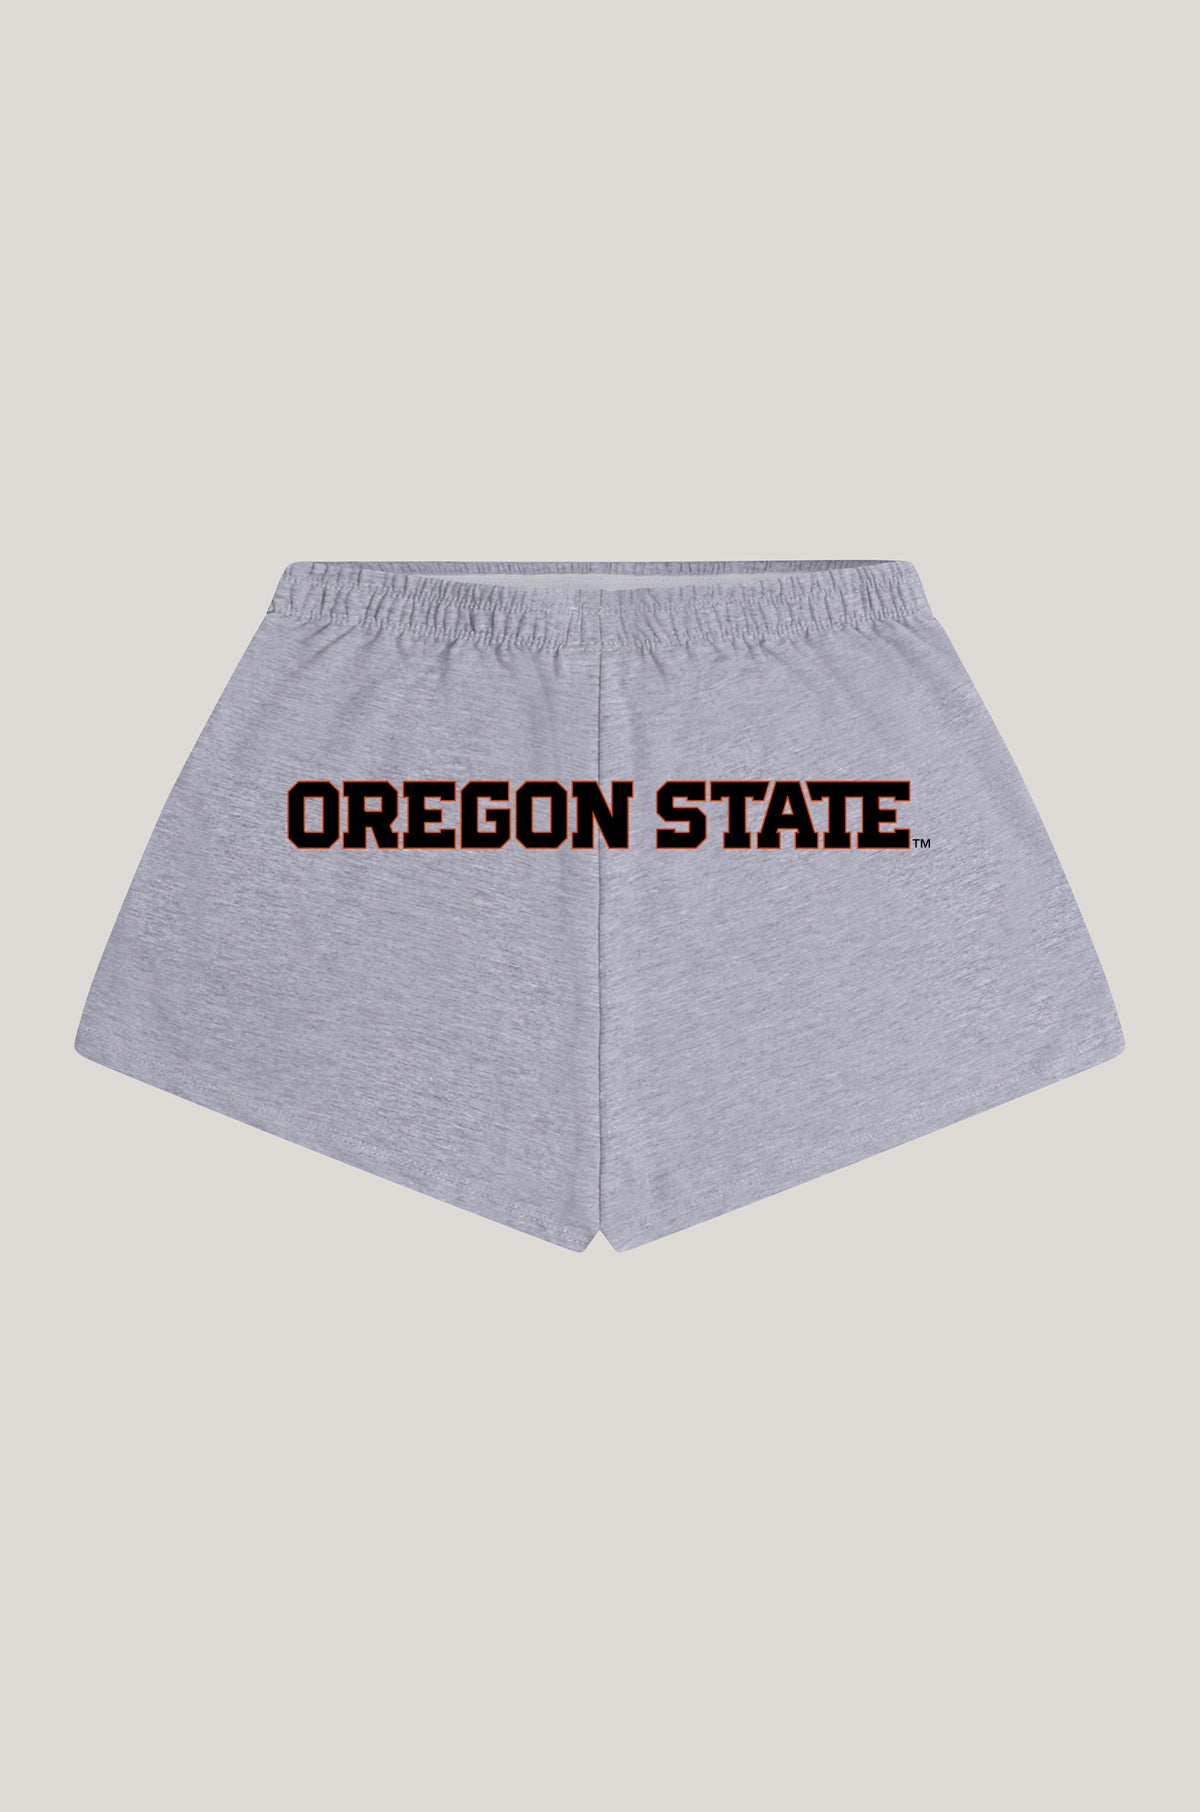 Oregon State P.E. Shorts